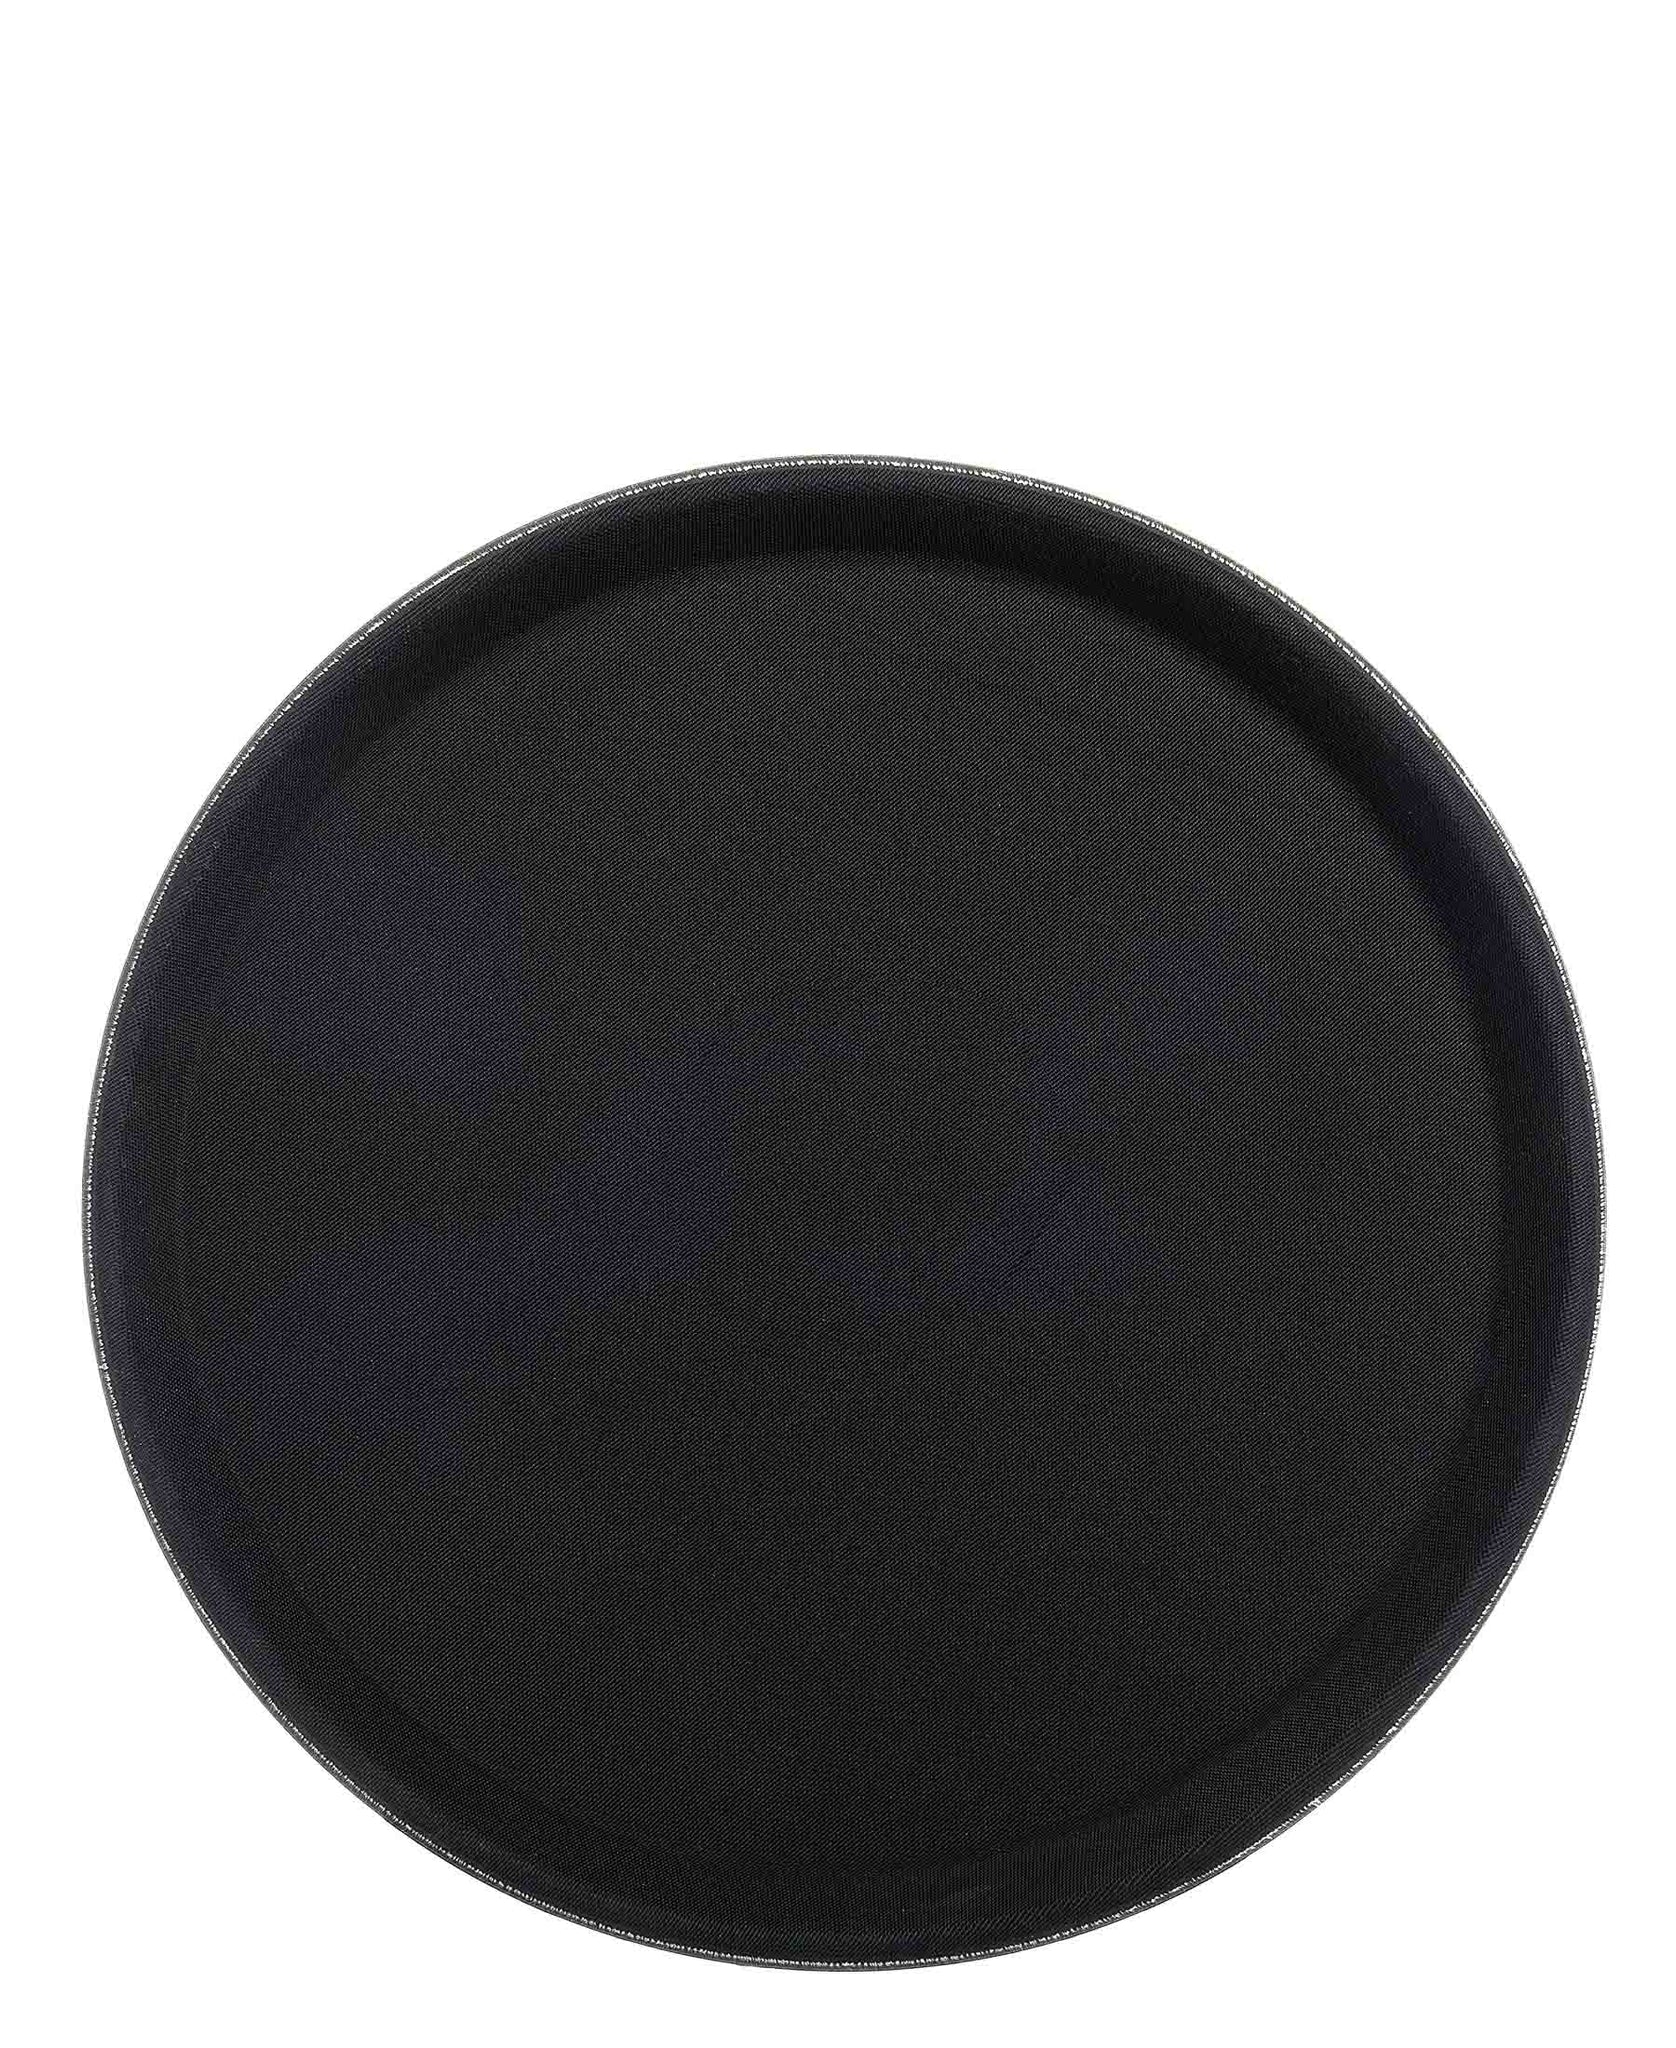 Steel King 40.5cm Fibreglass Round Non-Slip Tray - Black